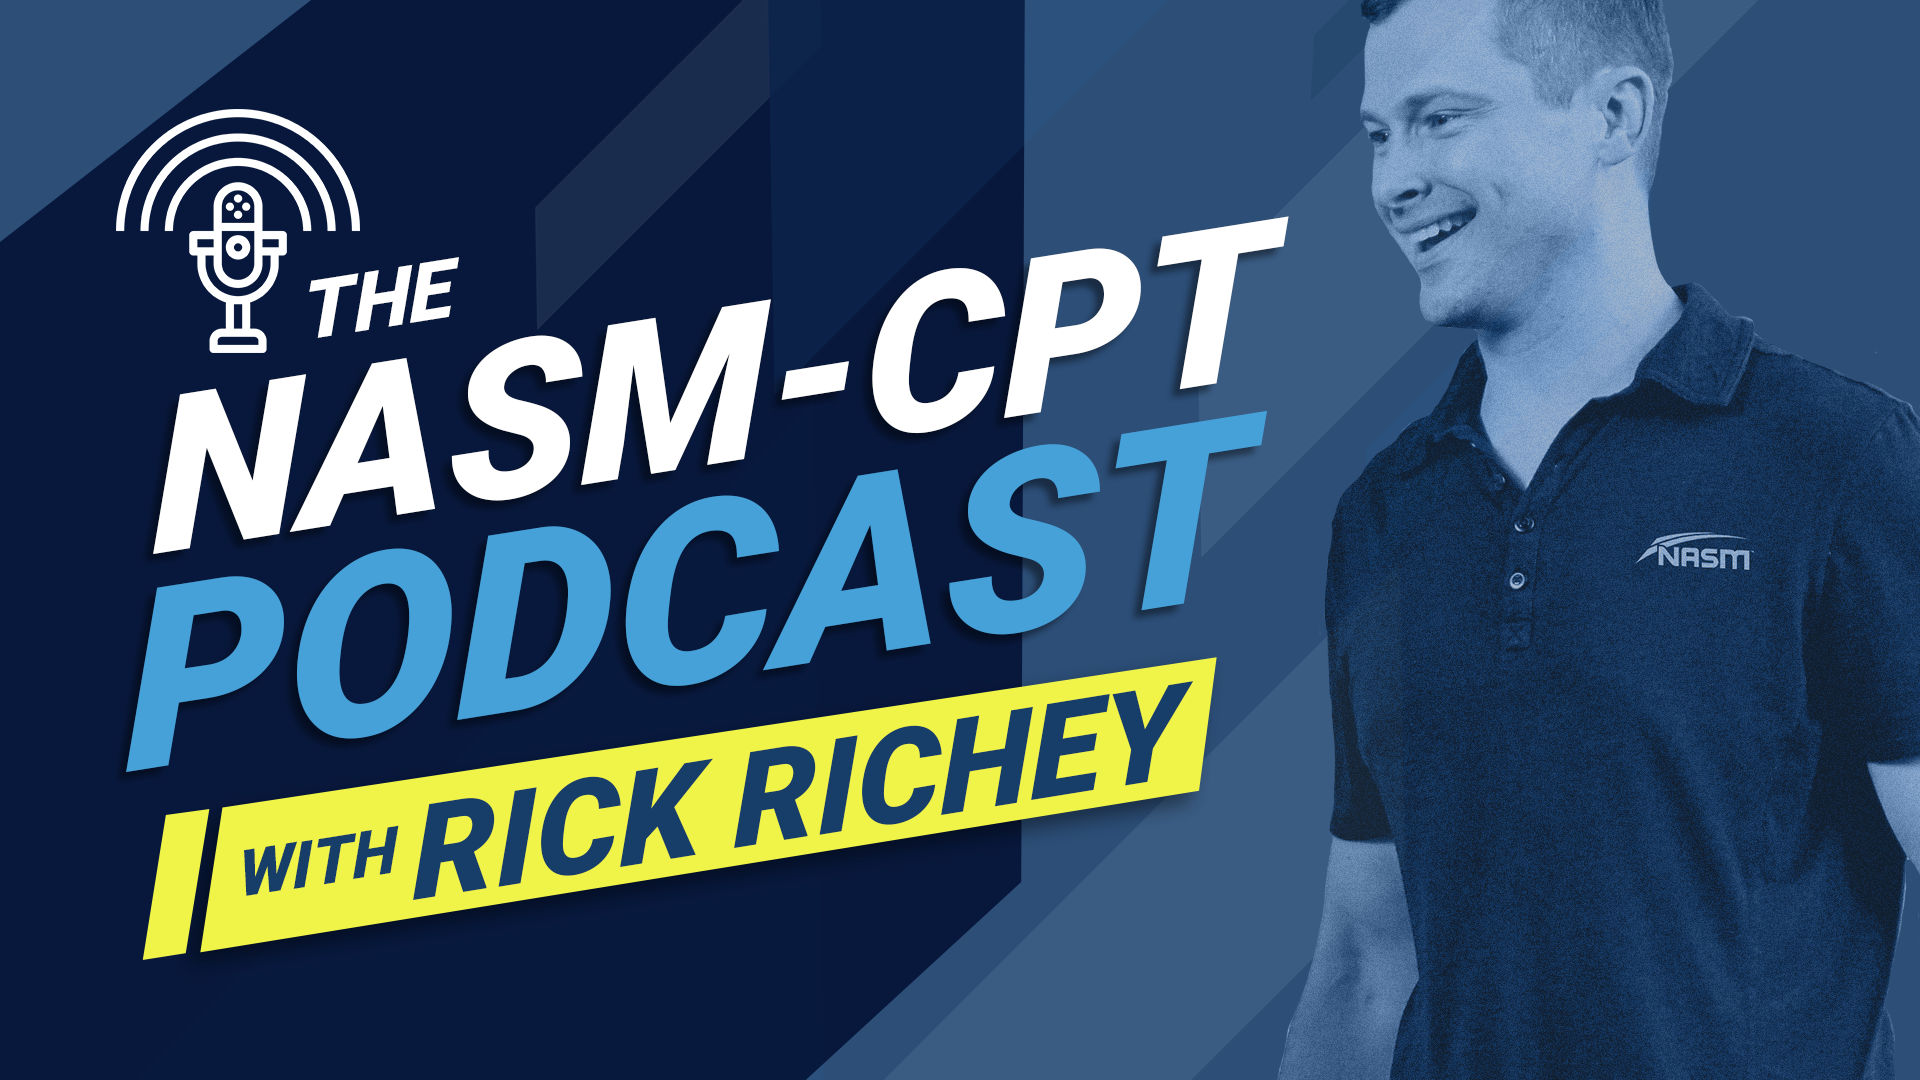 NASM-CPT Podcast